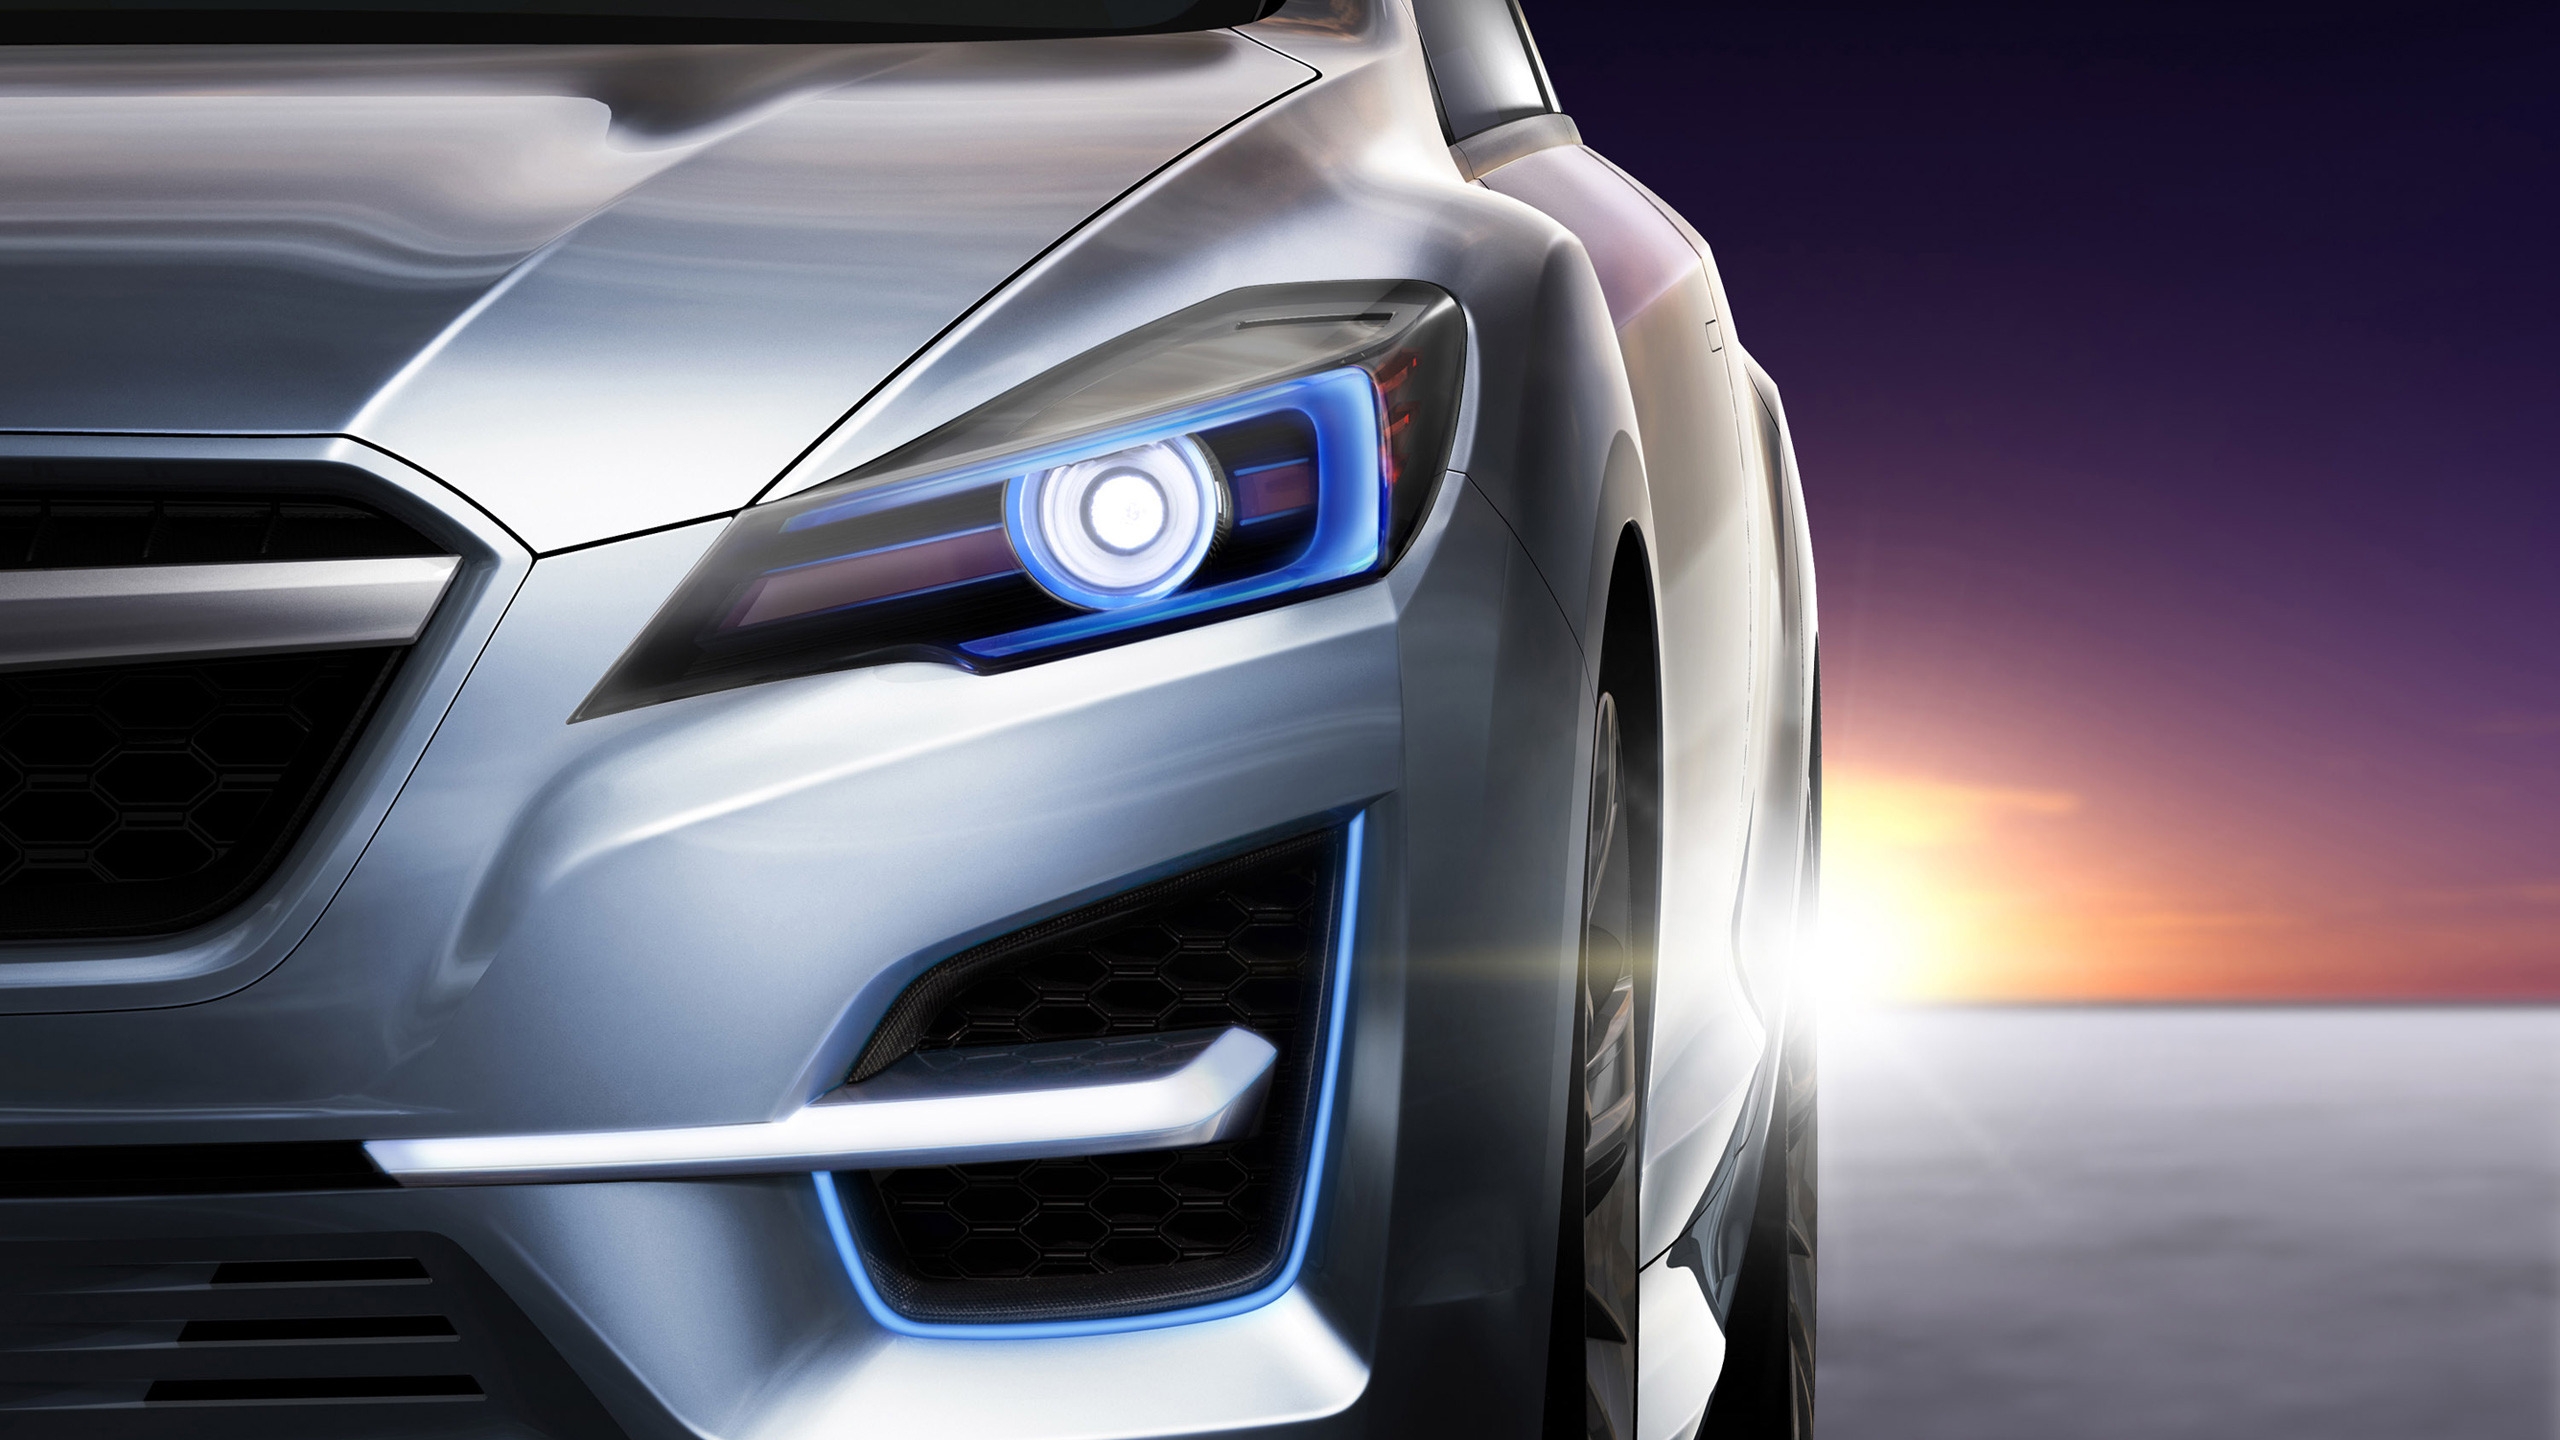 Subaru Impreza Concept headlight for 2560x1440 HDTV resolution